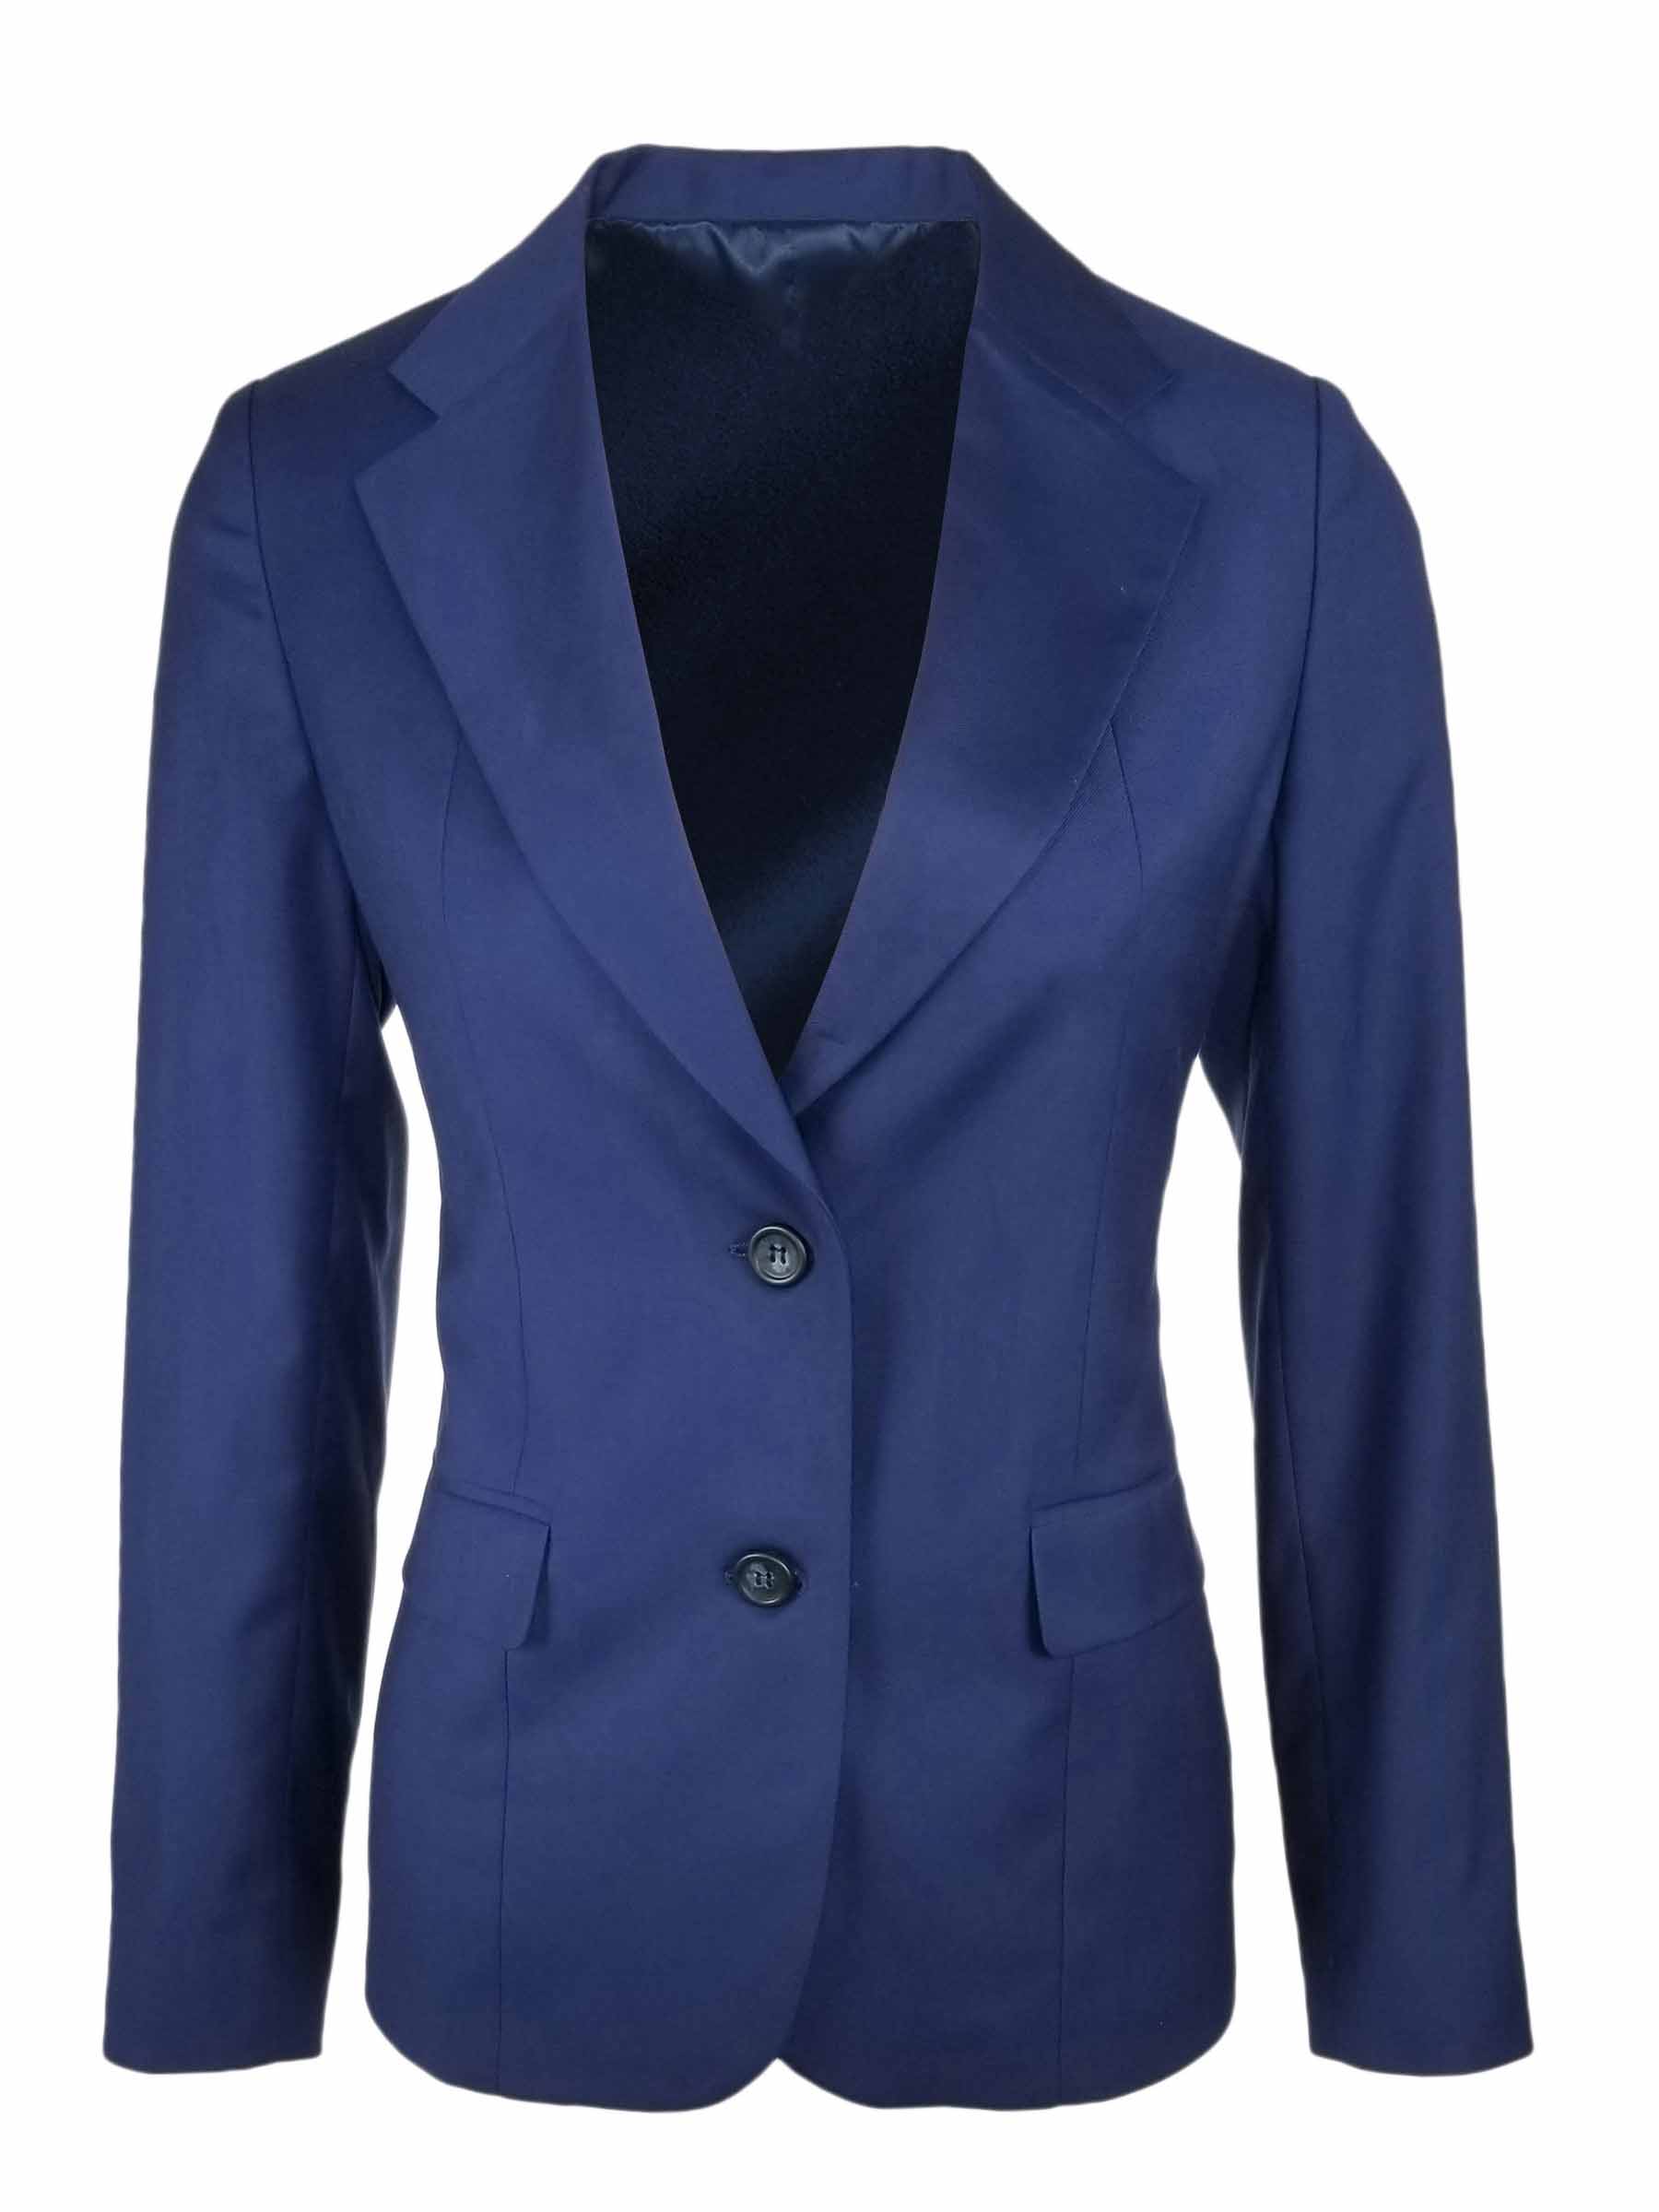 Women's 2 Button Wool Blend Jacket - Royal - Uniform Edit